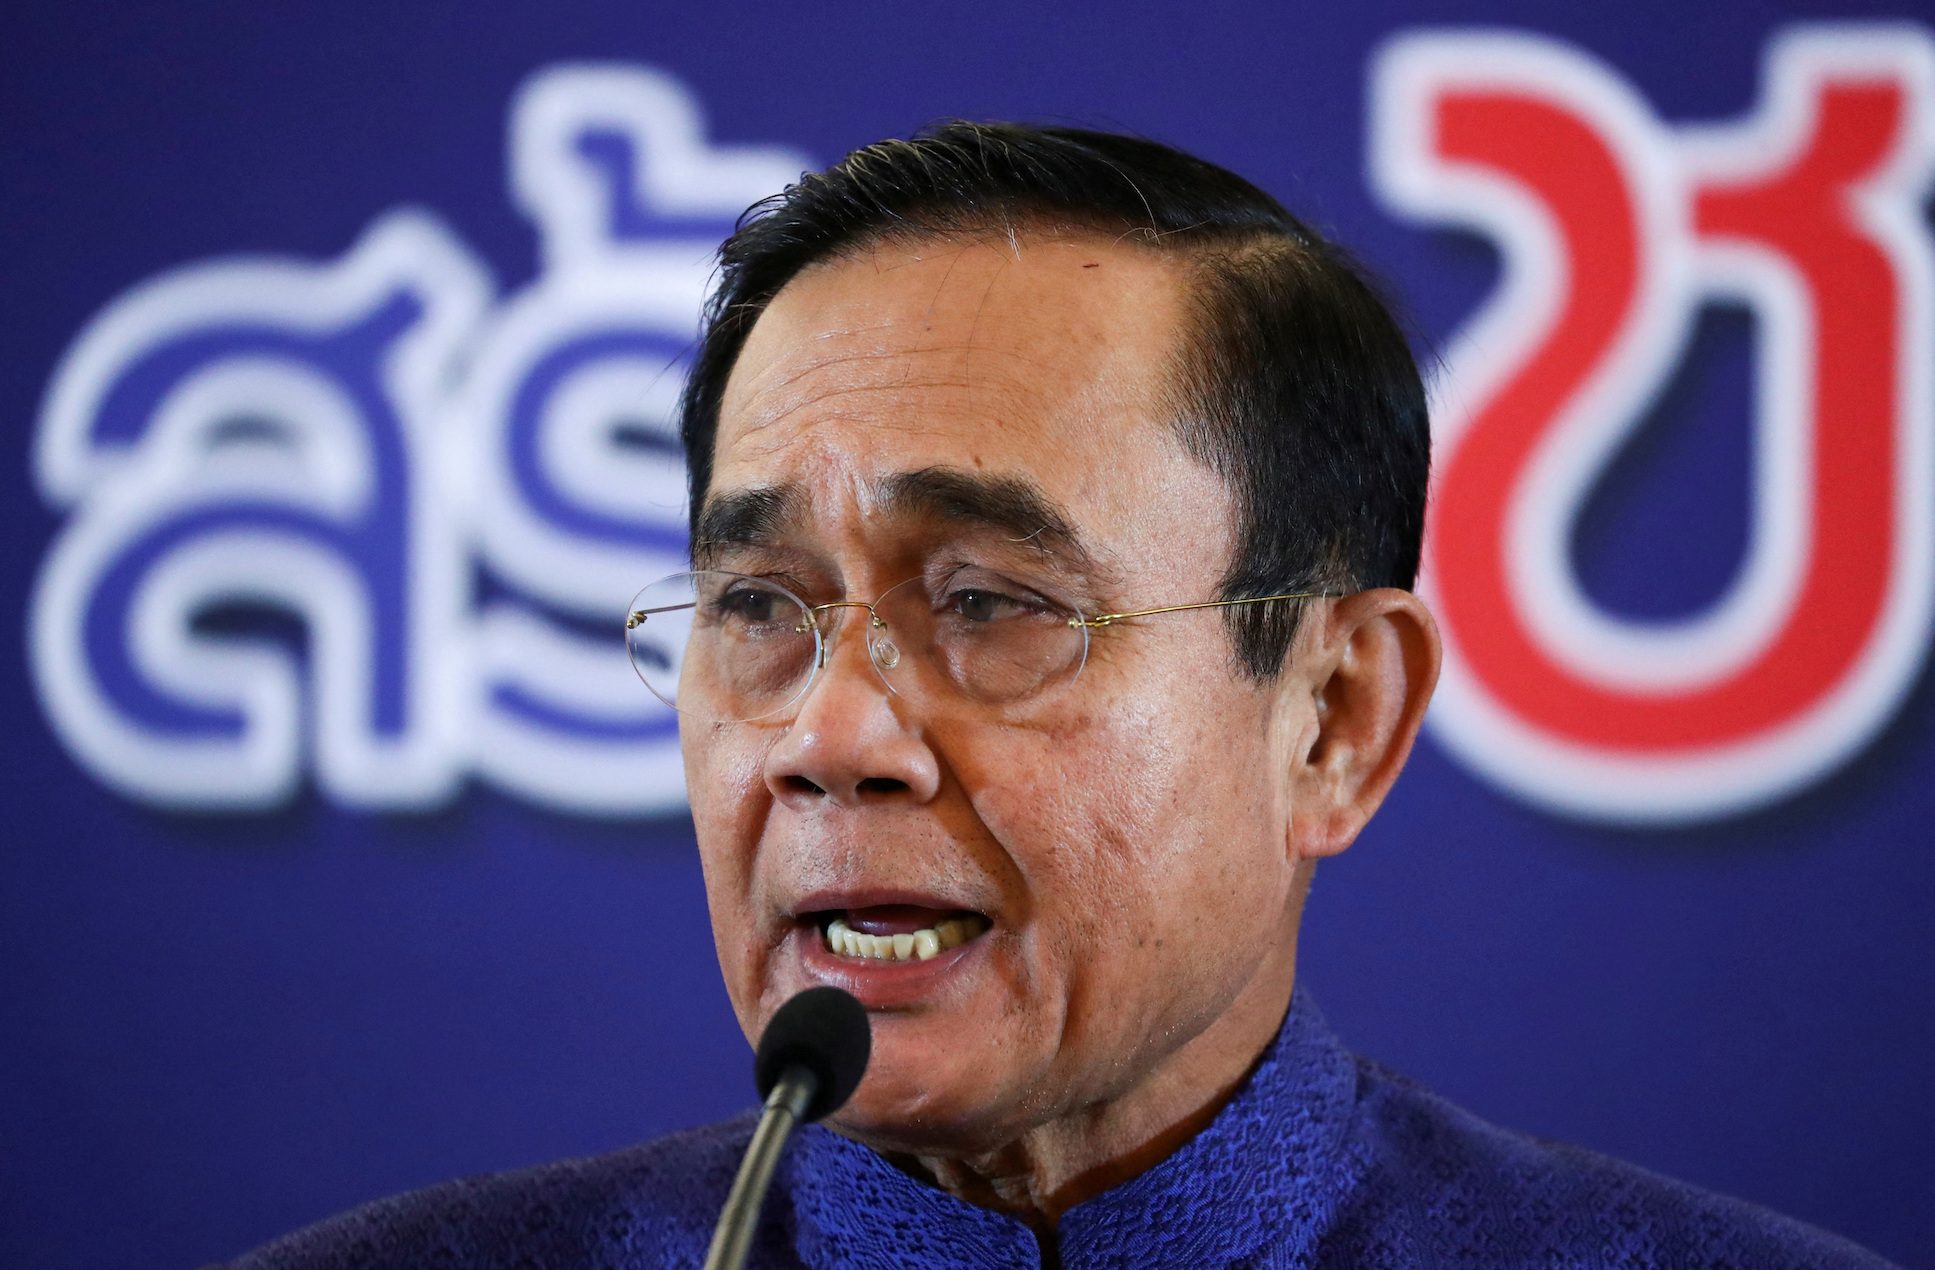 Thai PM to dissolve parliament before term ends next month